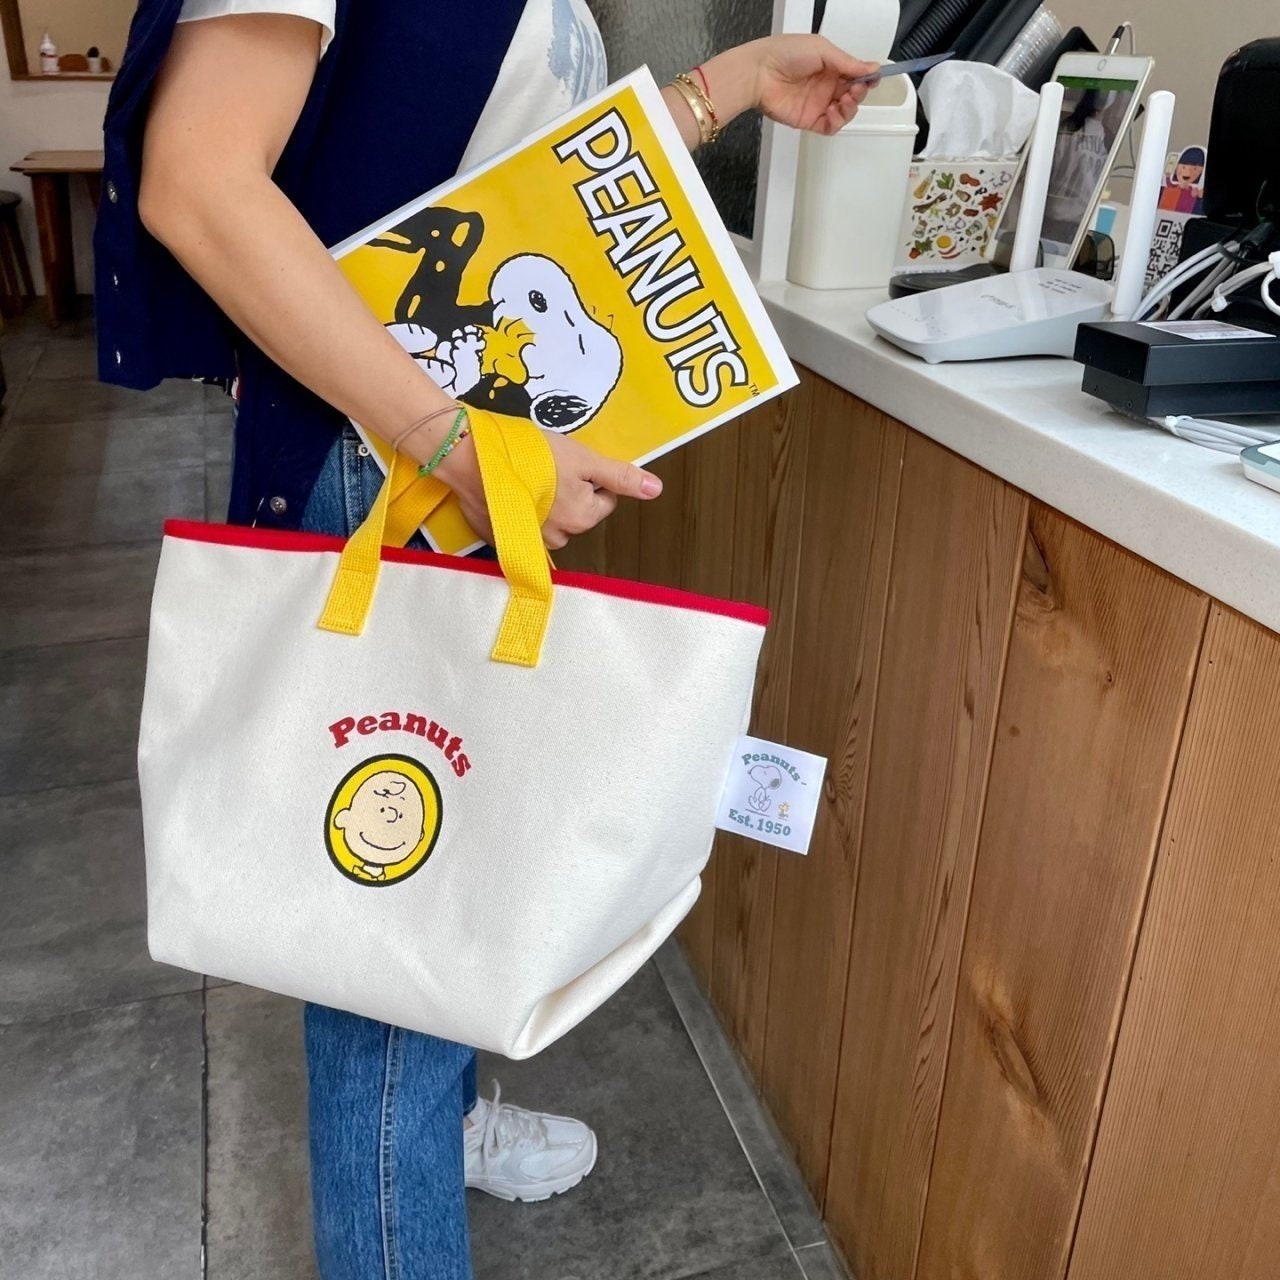 Brand New Large Hello Kitty Handbag Purse for Sale in Fullerton